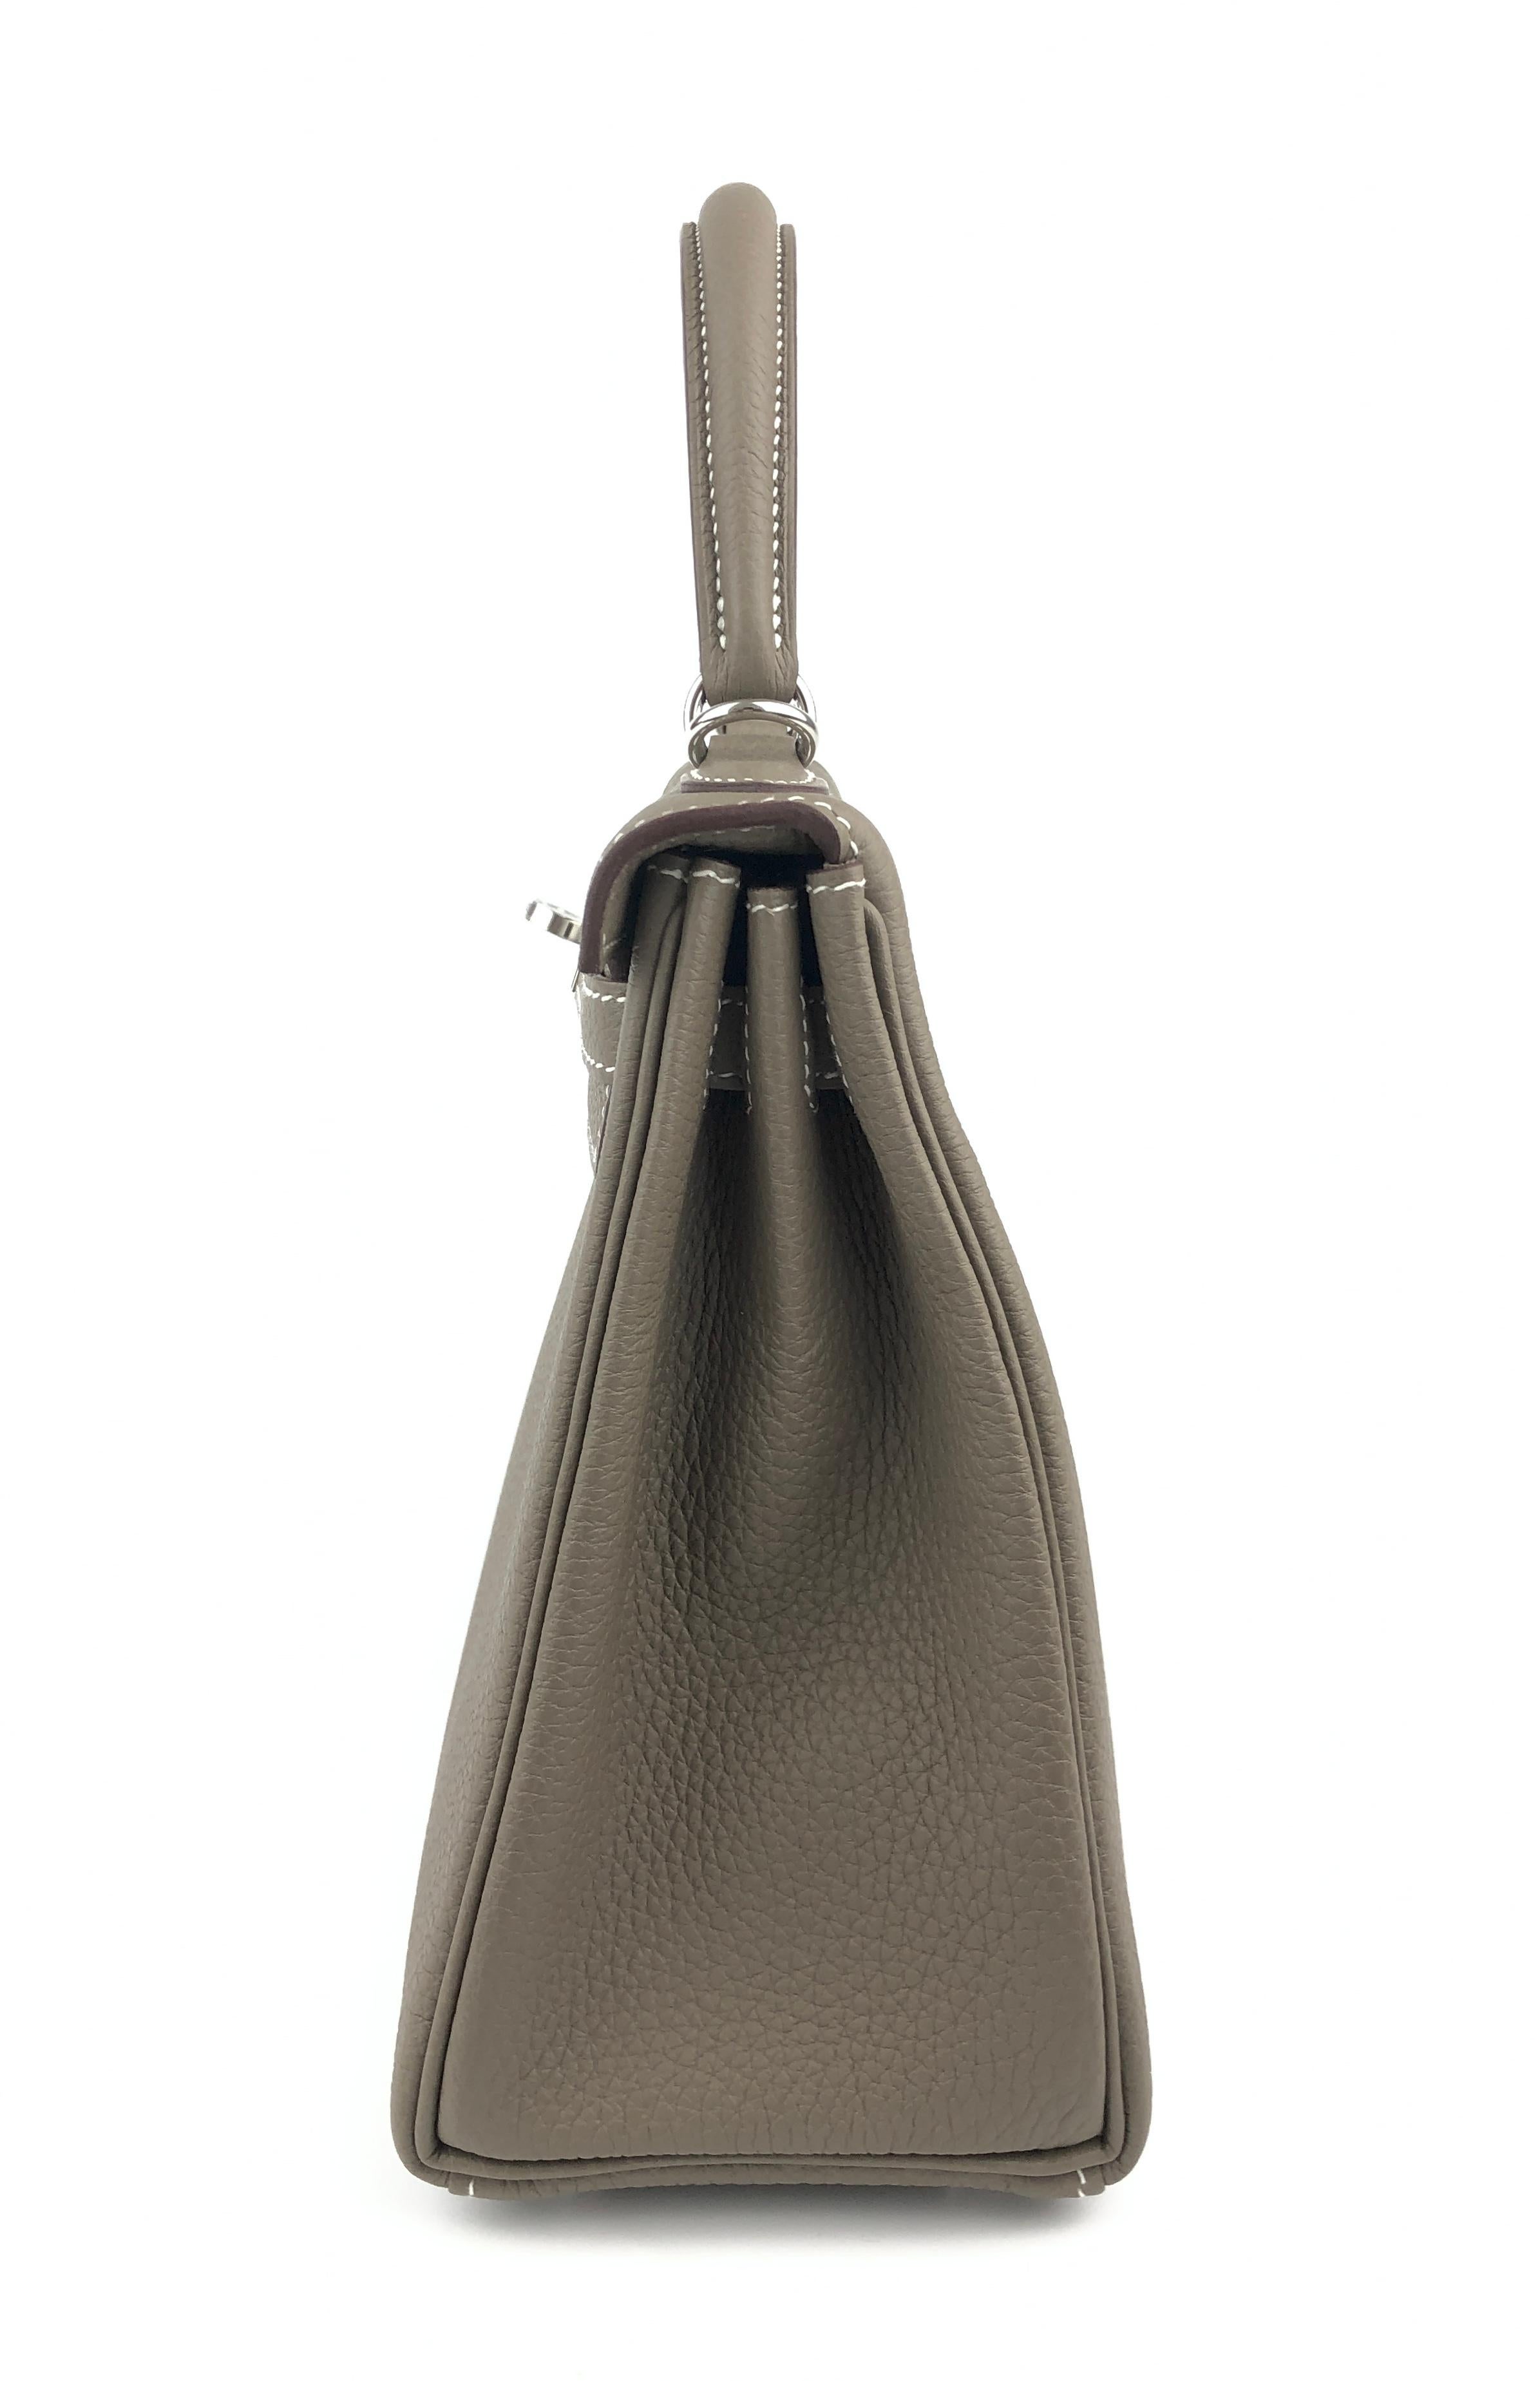 Hermes Kelly 25 Etoupe Gray Taupe Togo Leather Palladium Shoulder Bag NEW 2021 2